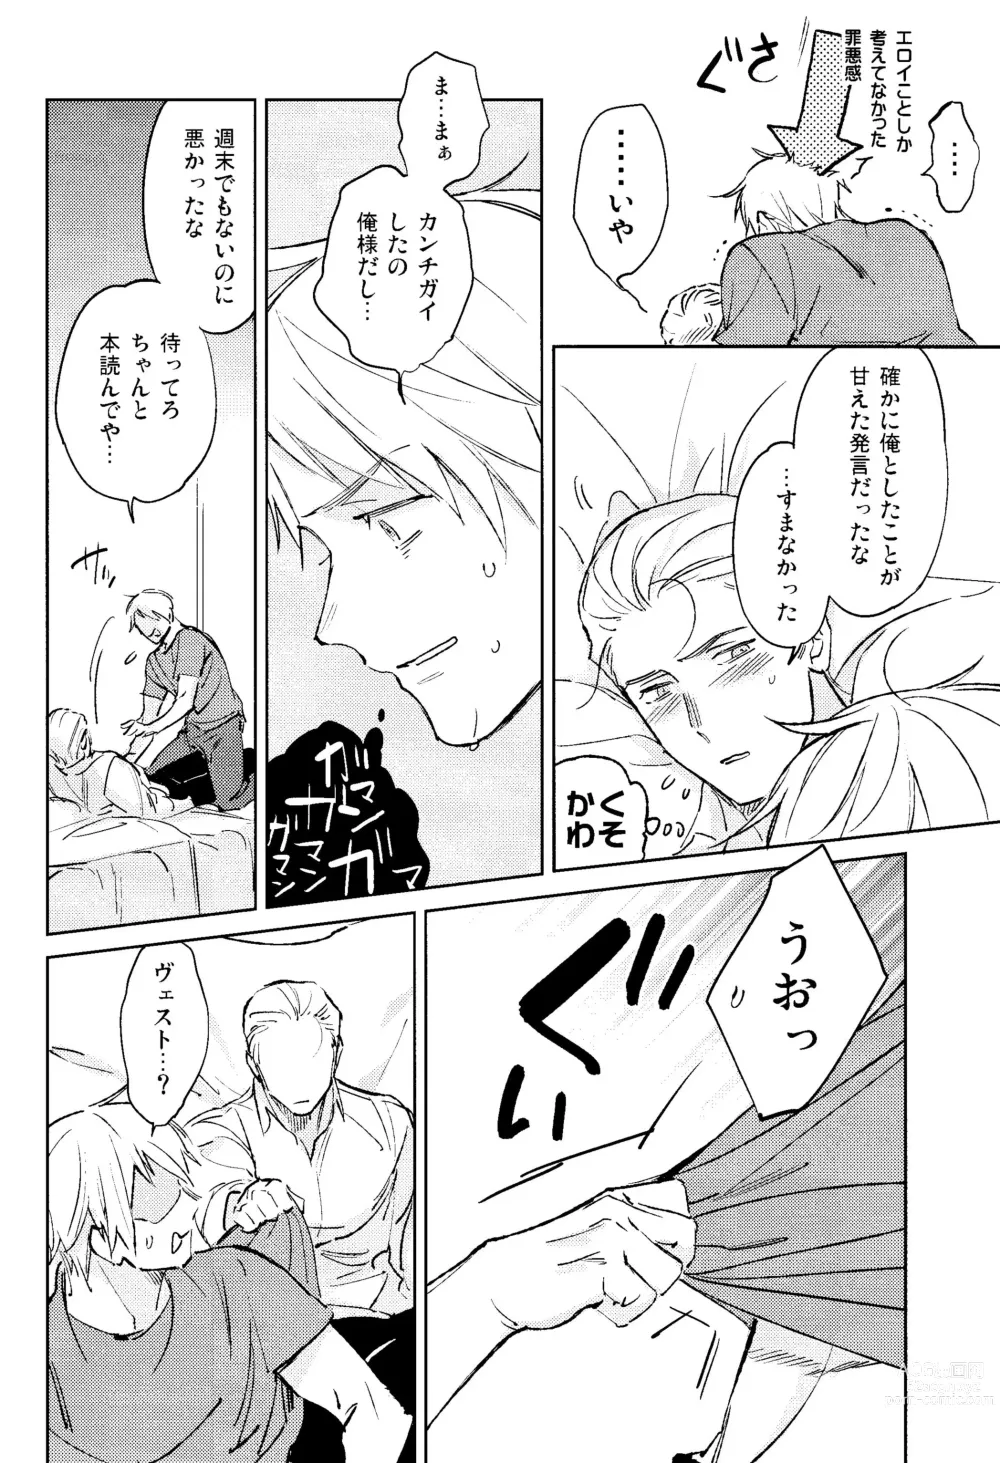 Page 12 of doujinshi Toge